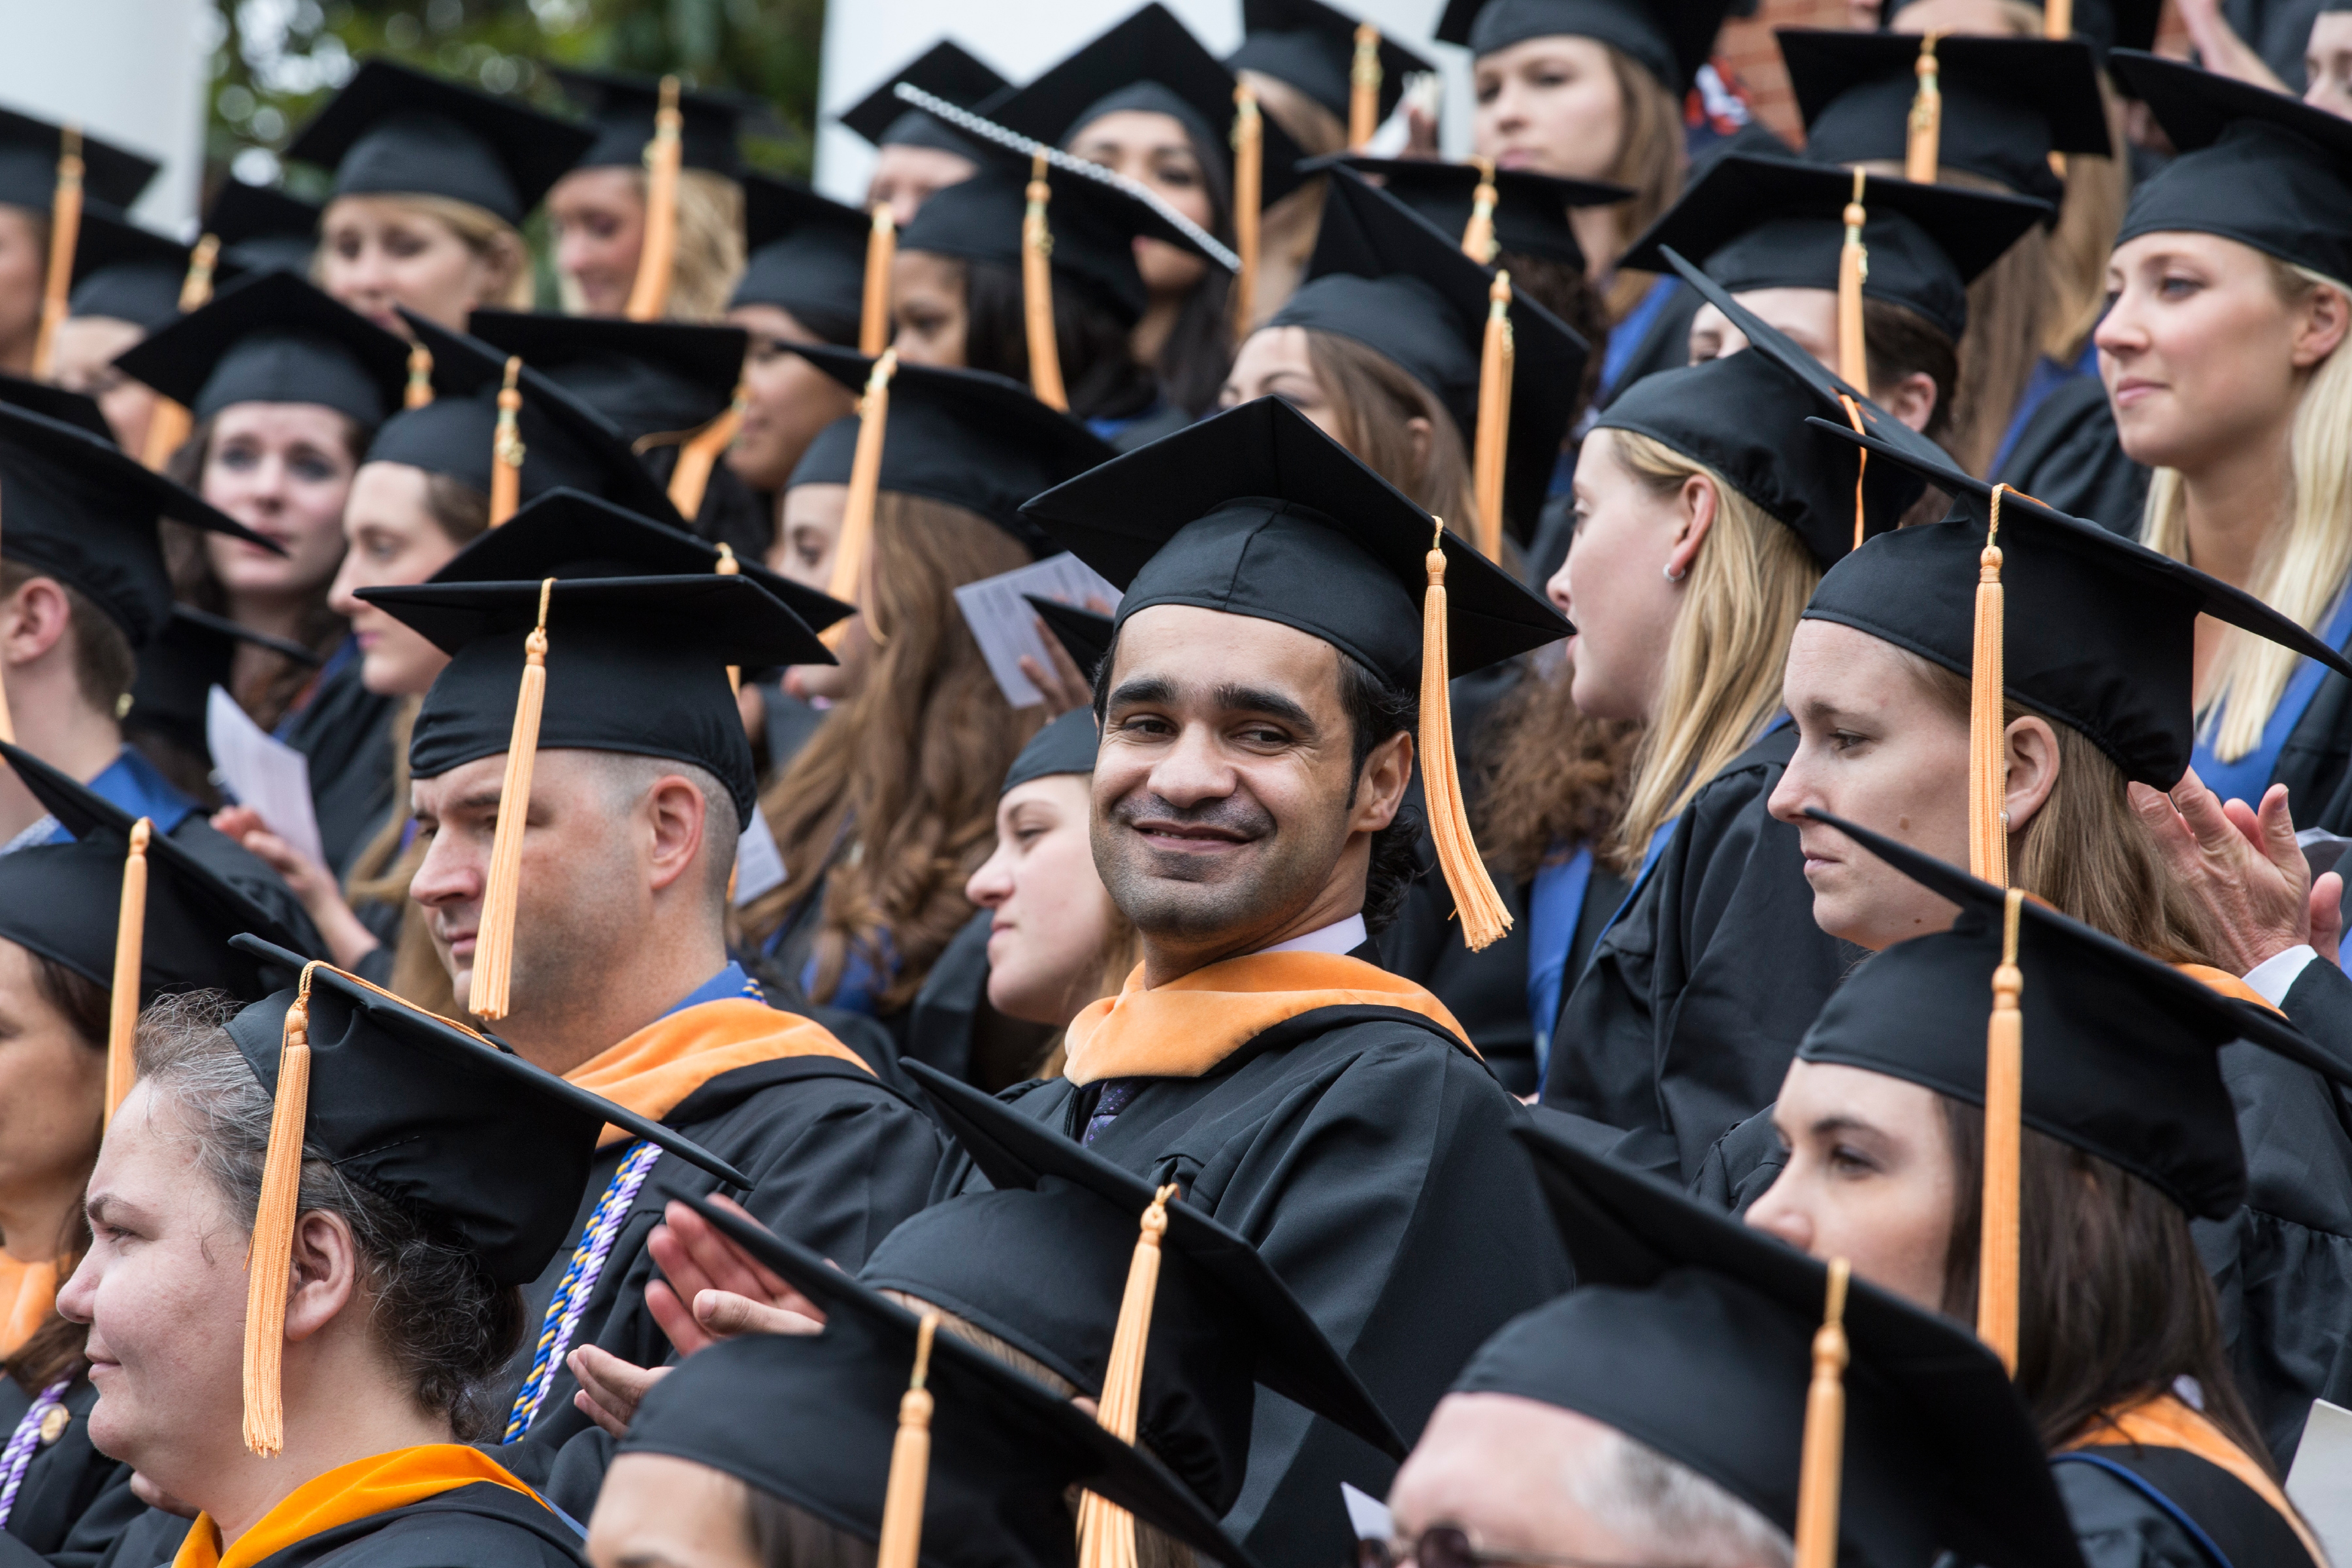 U.Va. Recognized for Providing Extraordinary Value in Higher Education